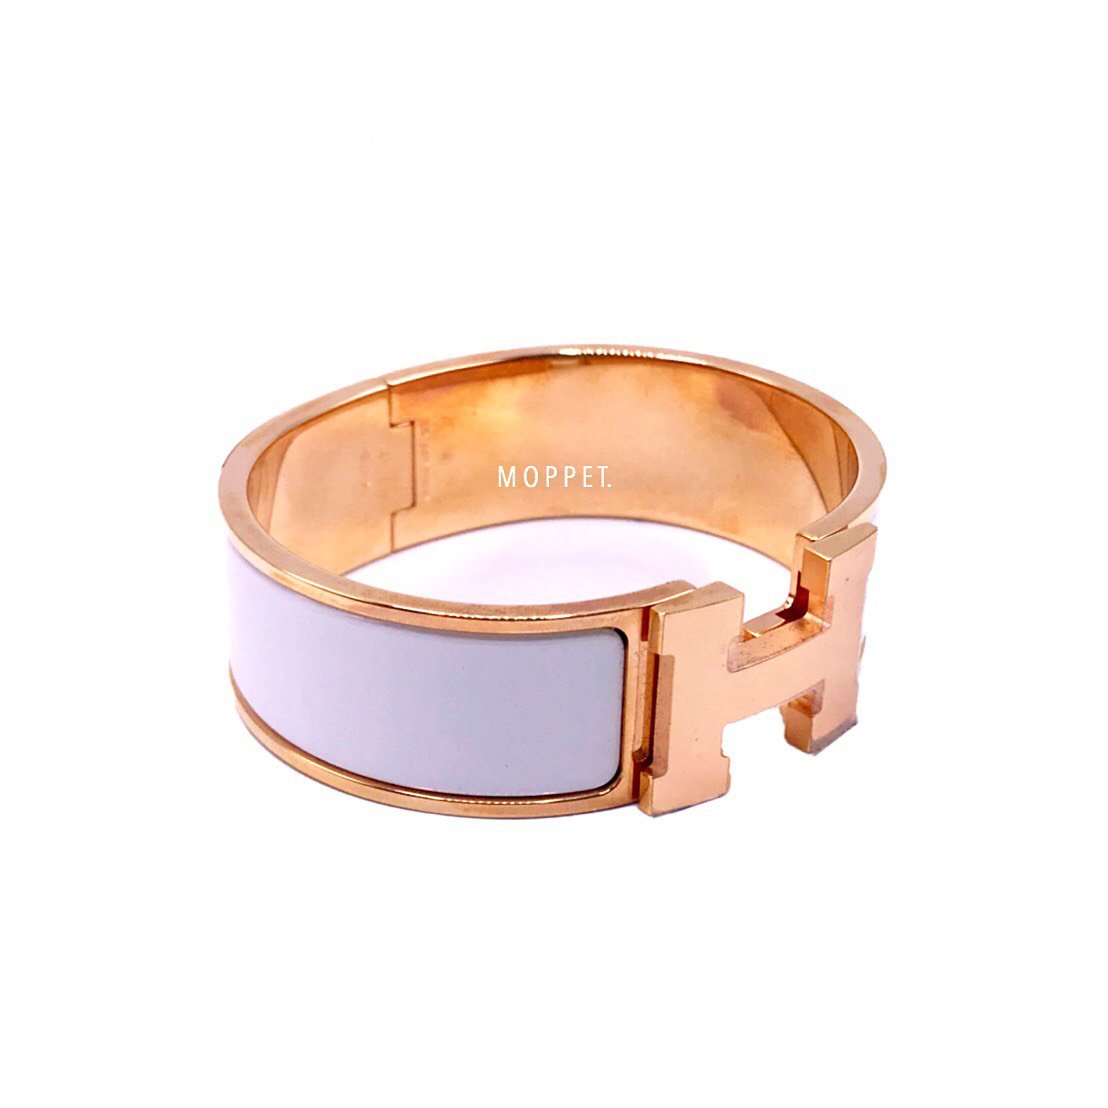 NEW Hermes Clic Clac Bracelet Size S in White GHW